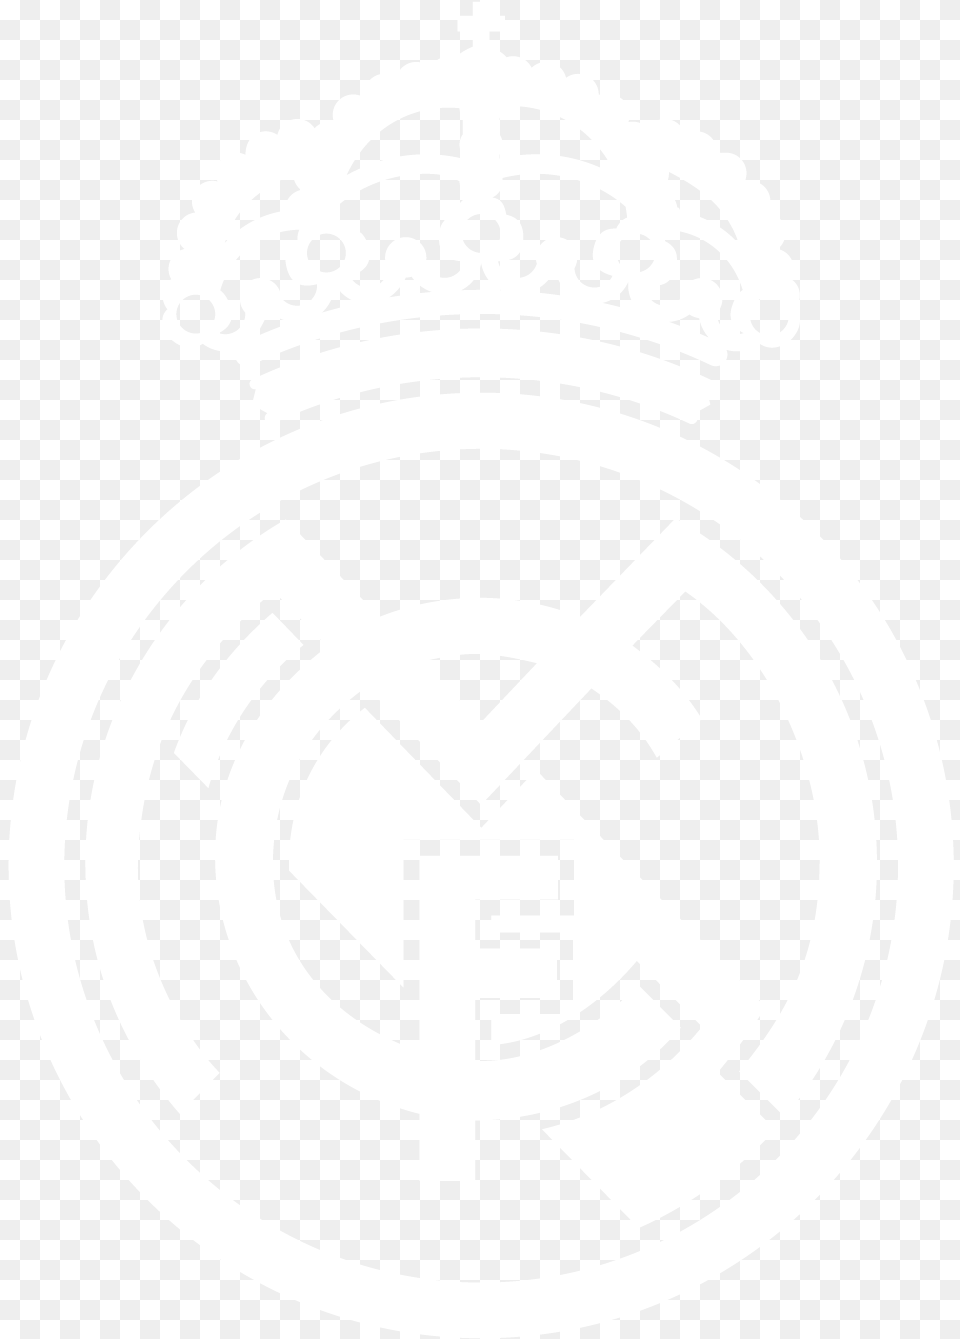 Logo En English To Watch This Video Enable Real Madrid Black Logo, Emblem, Symbol, Stencil, Ammunition Png